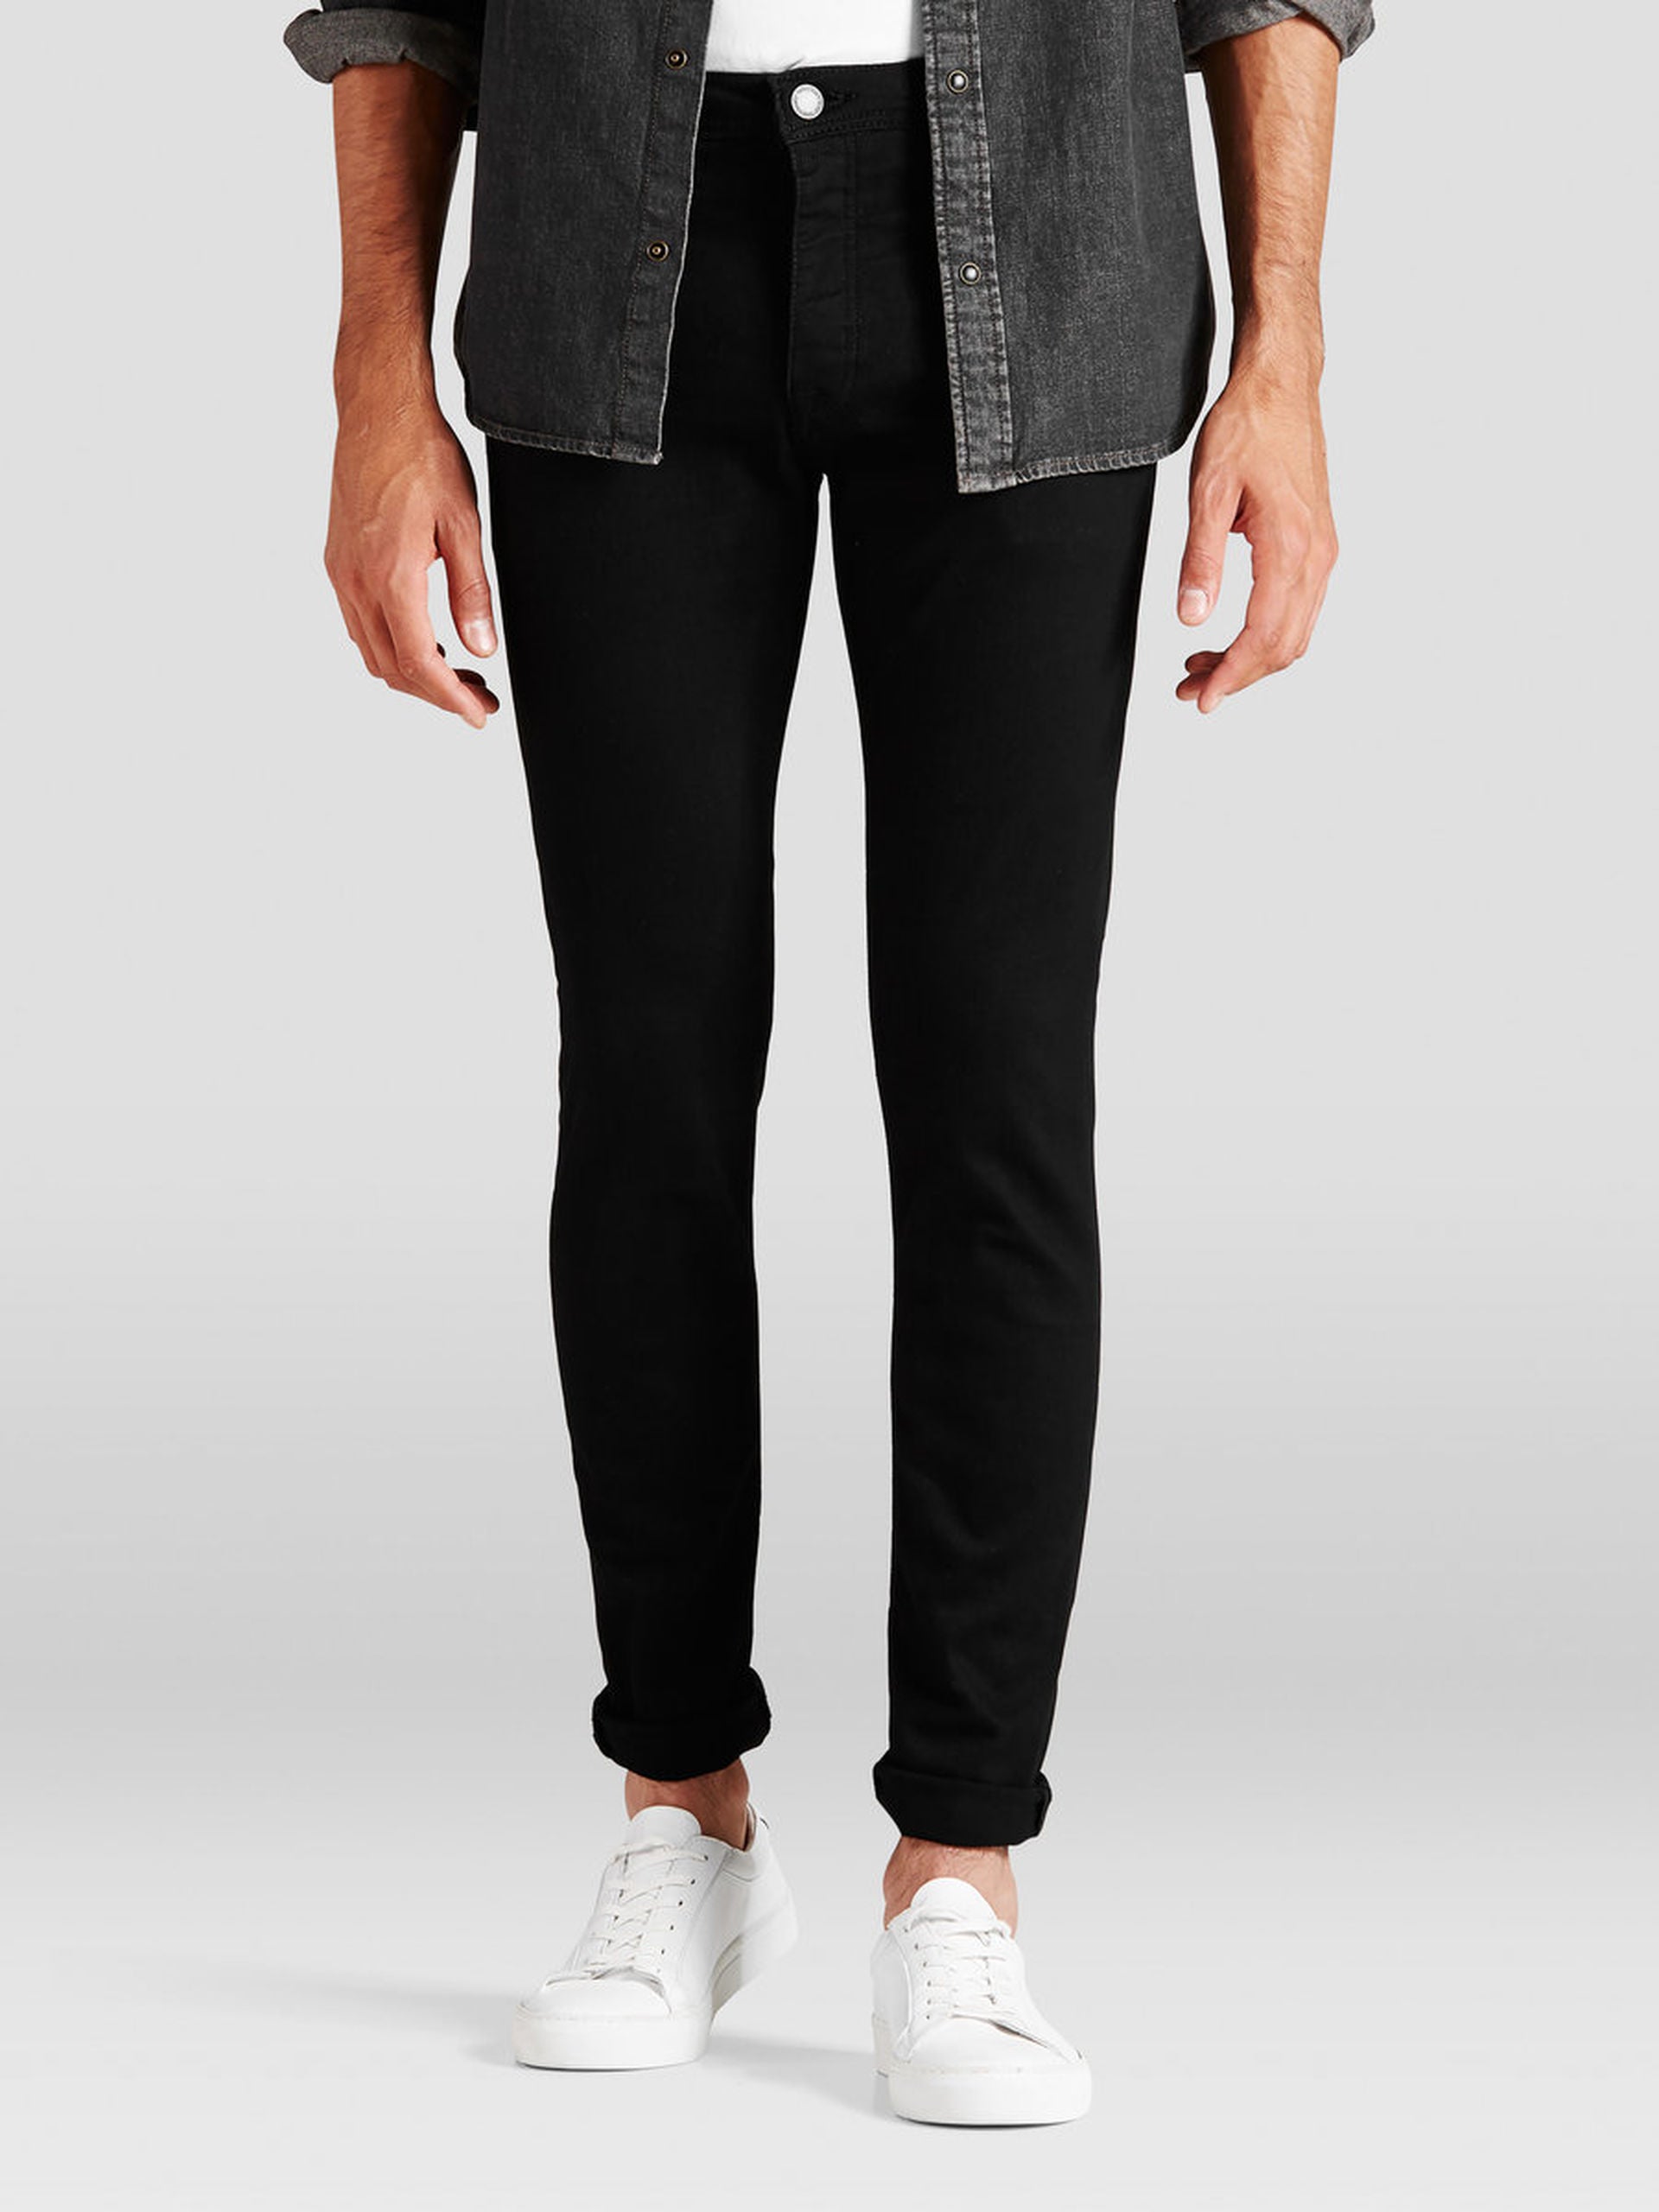 Glenn 046 Slim Fit Black Jeans By Jack Jones - Spirit Clothing